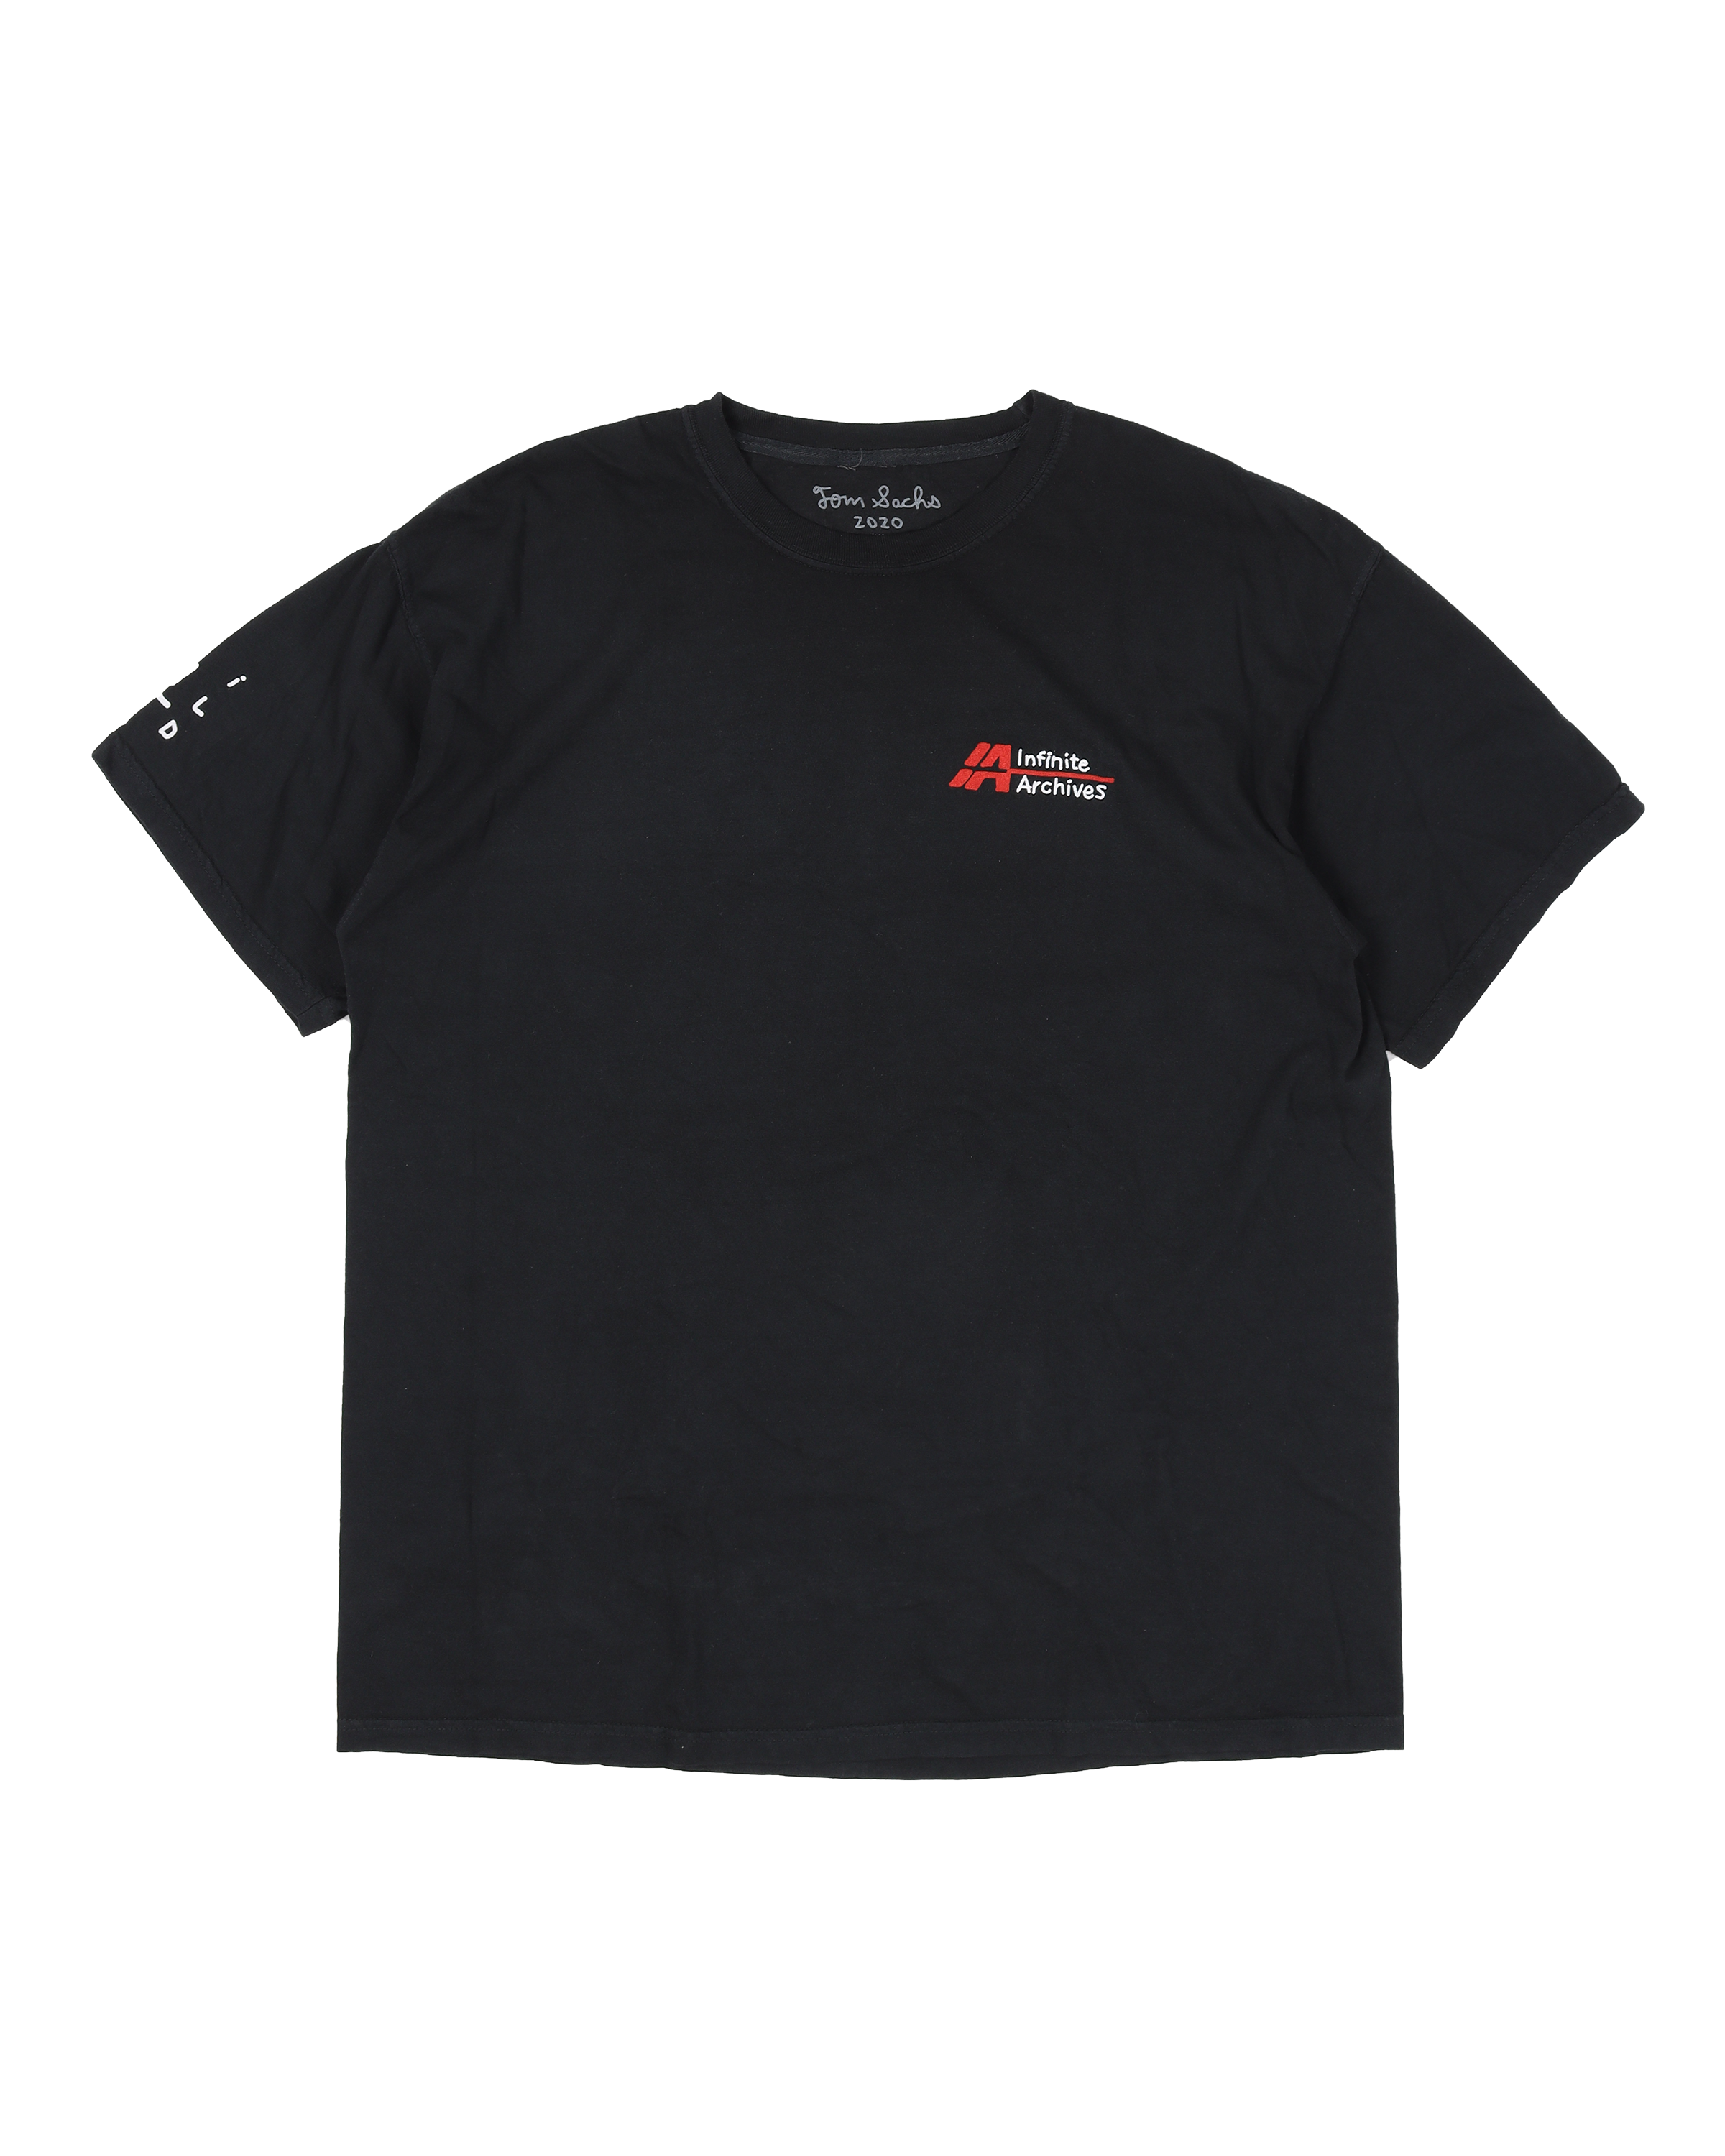 Tom Sachs "Break The Cycle" T-Shirt